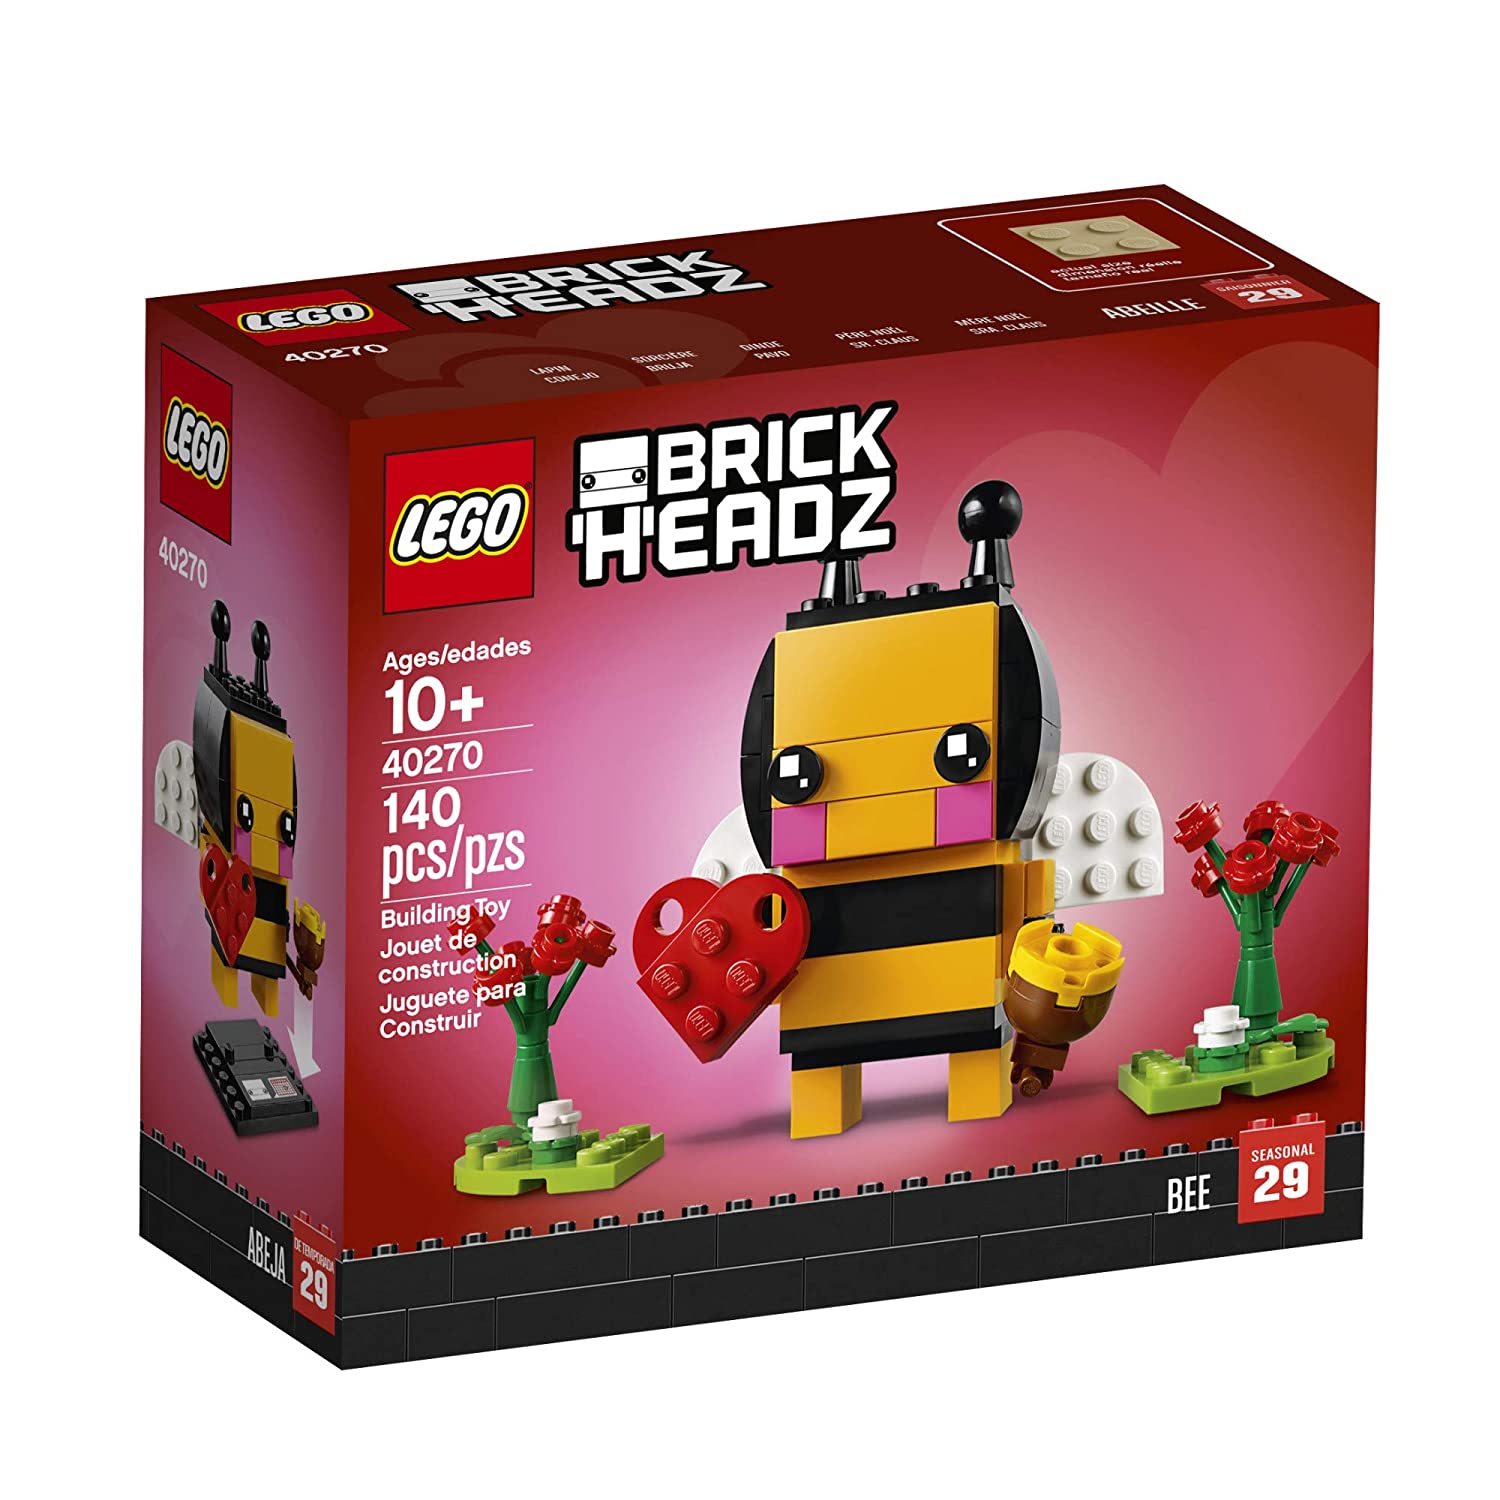 11 Best Lego Brickheadz 2022 - Buying Guide & Reviews 1